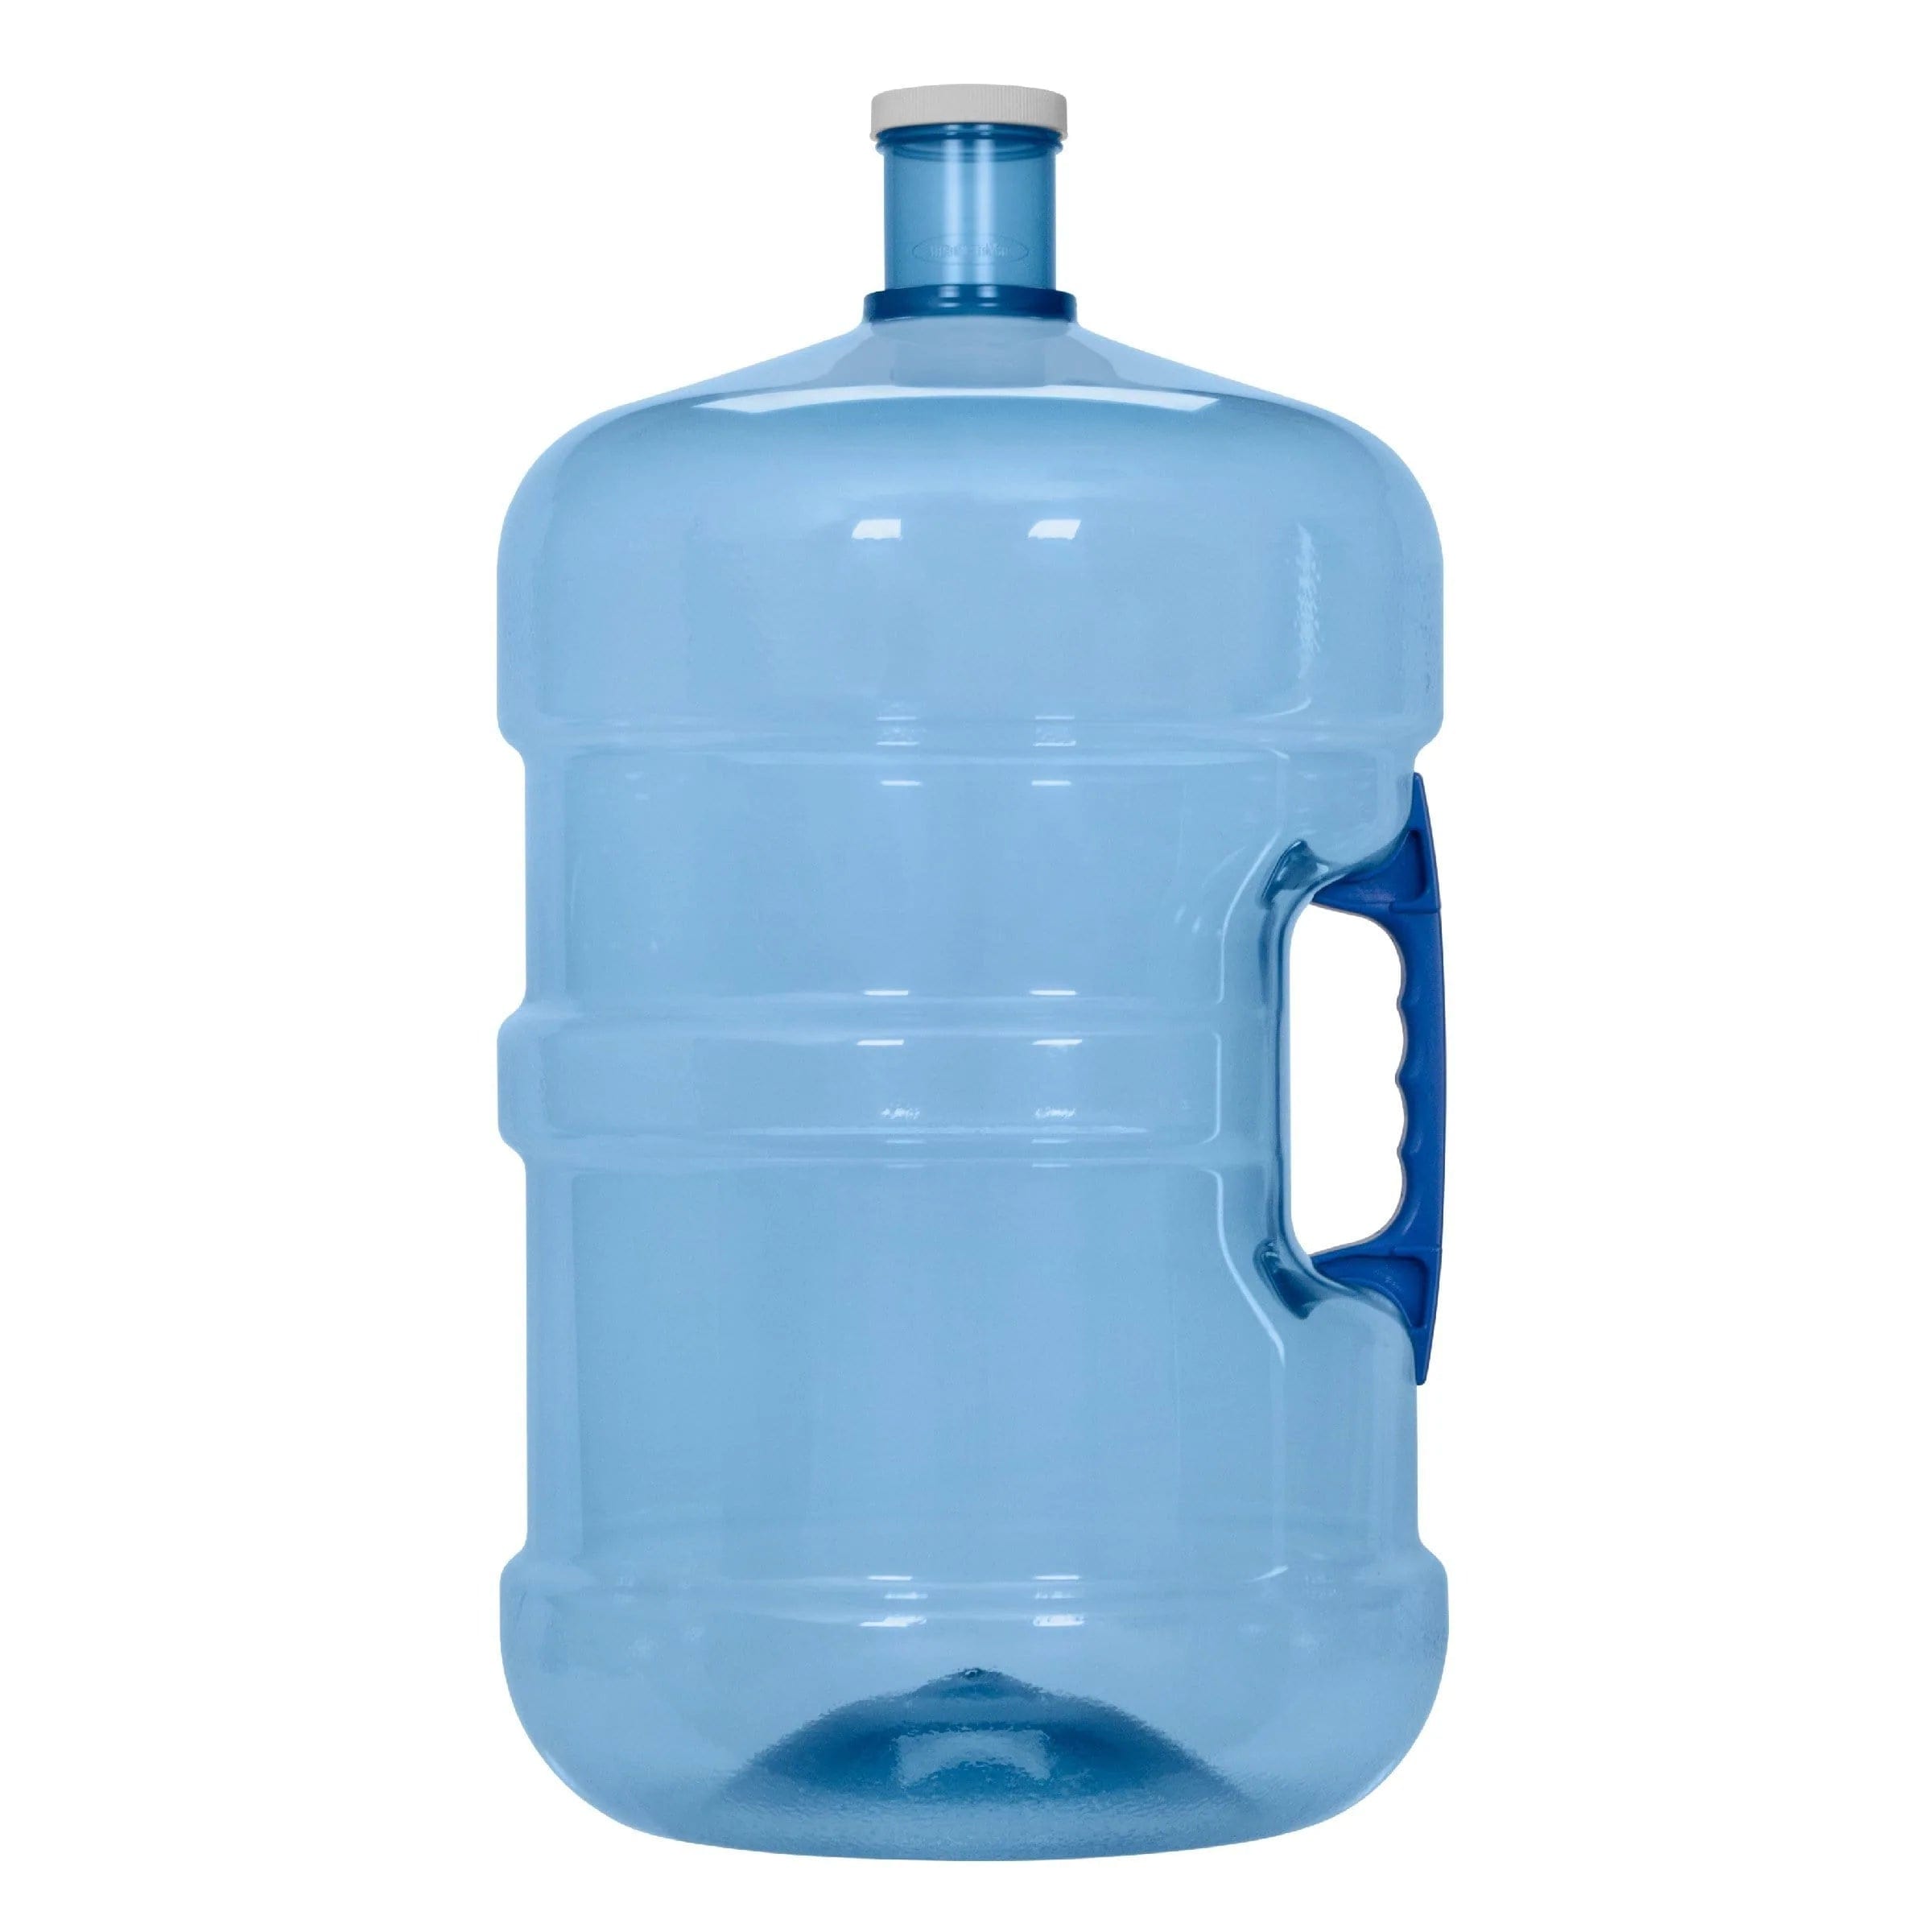  Paquete de 2 botellas de agua de 5 galones (18.93 L